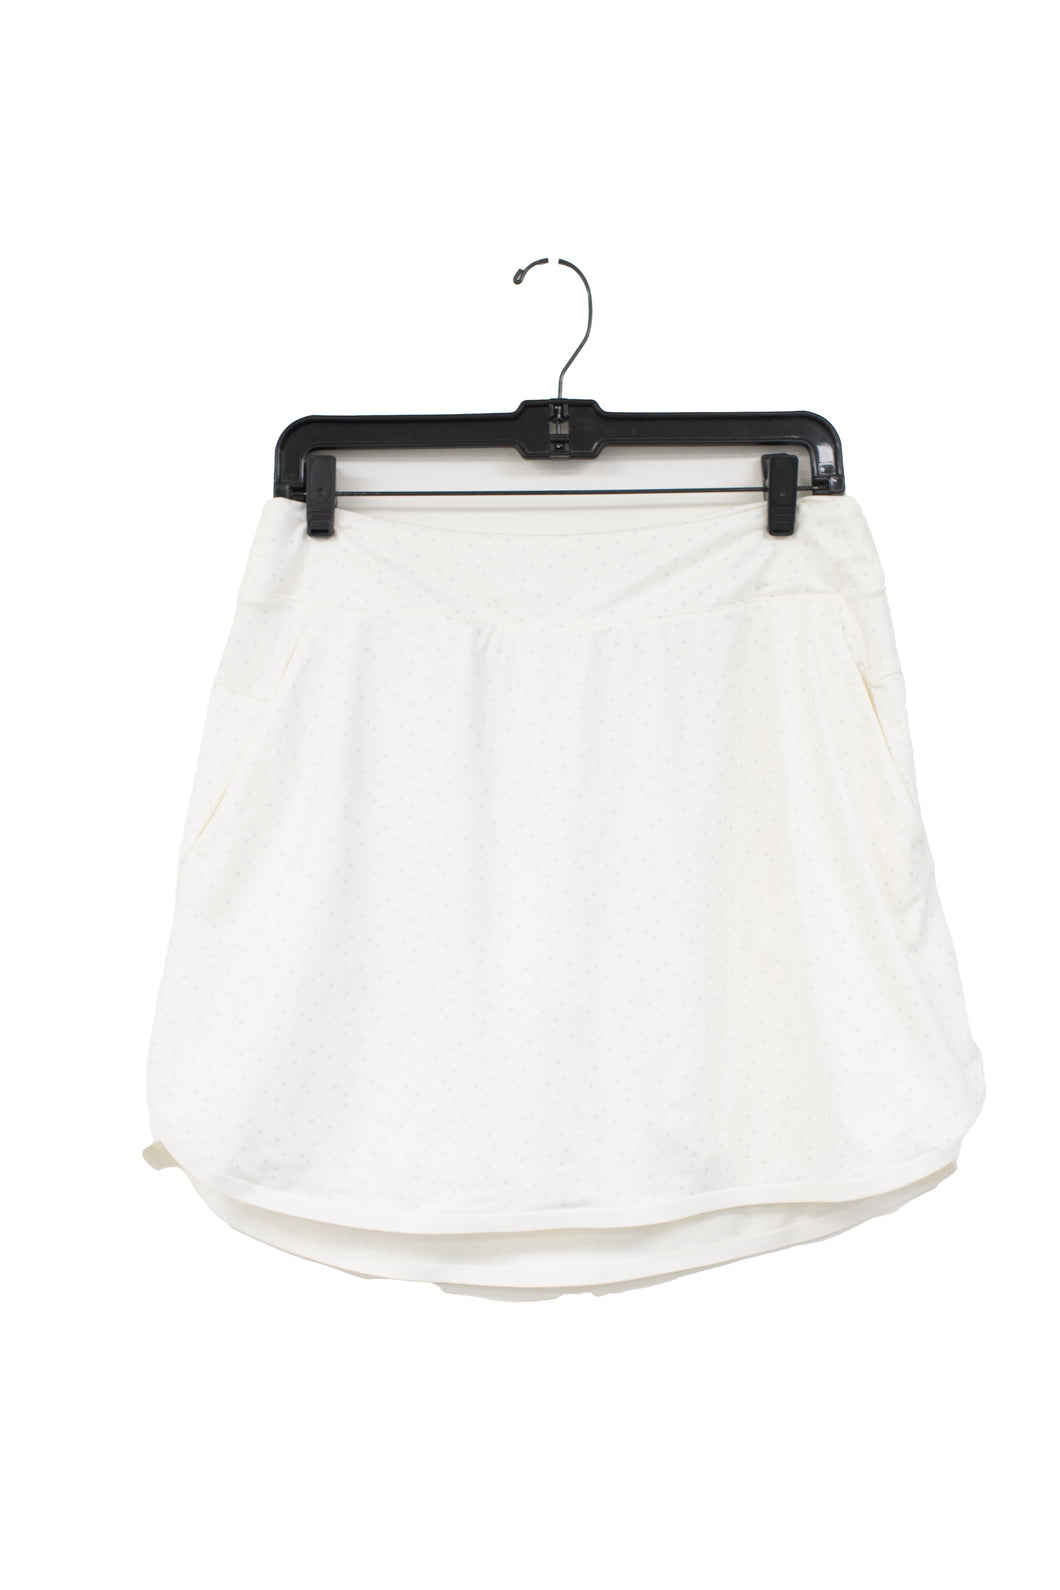 Nike Dri Fit White Tennis Skirt